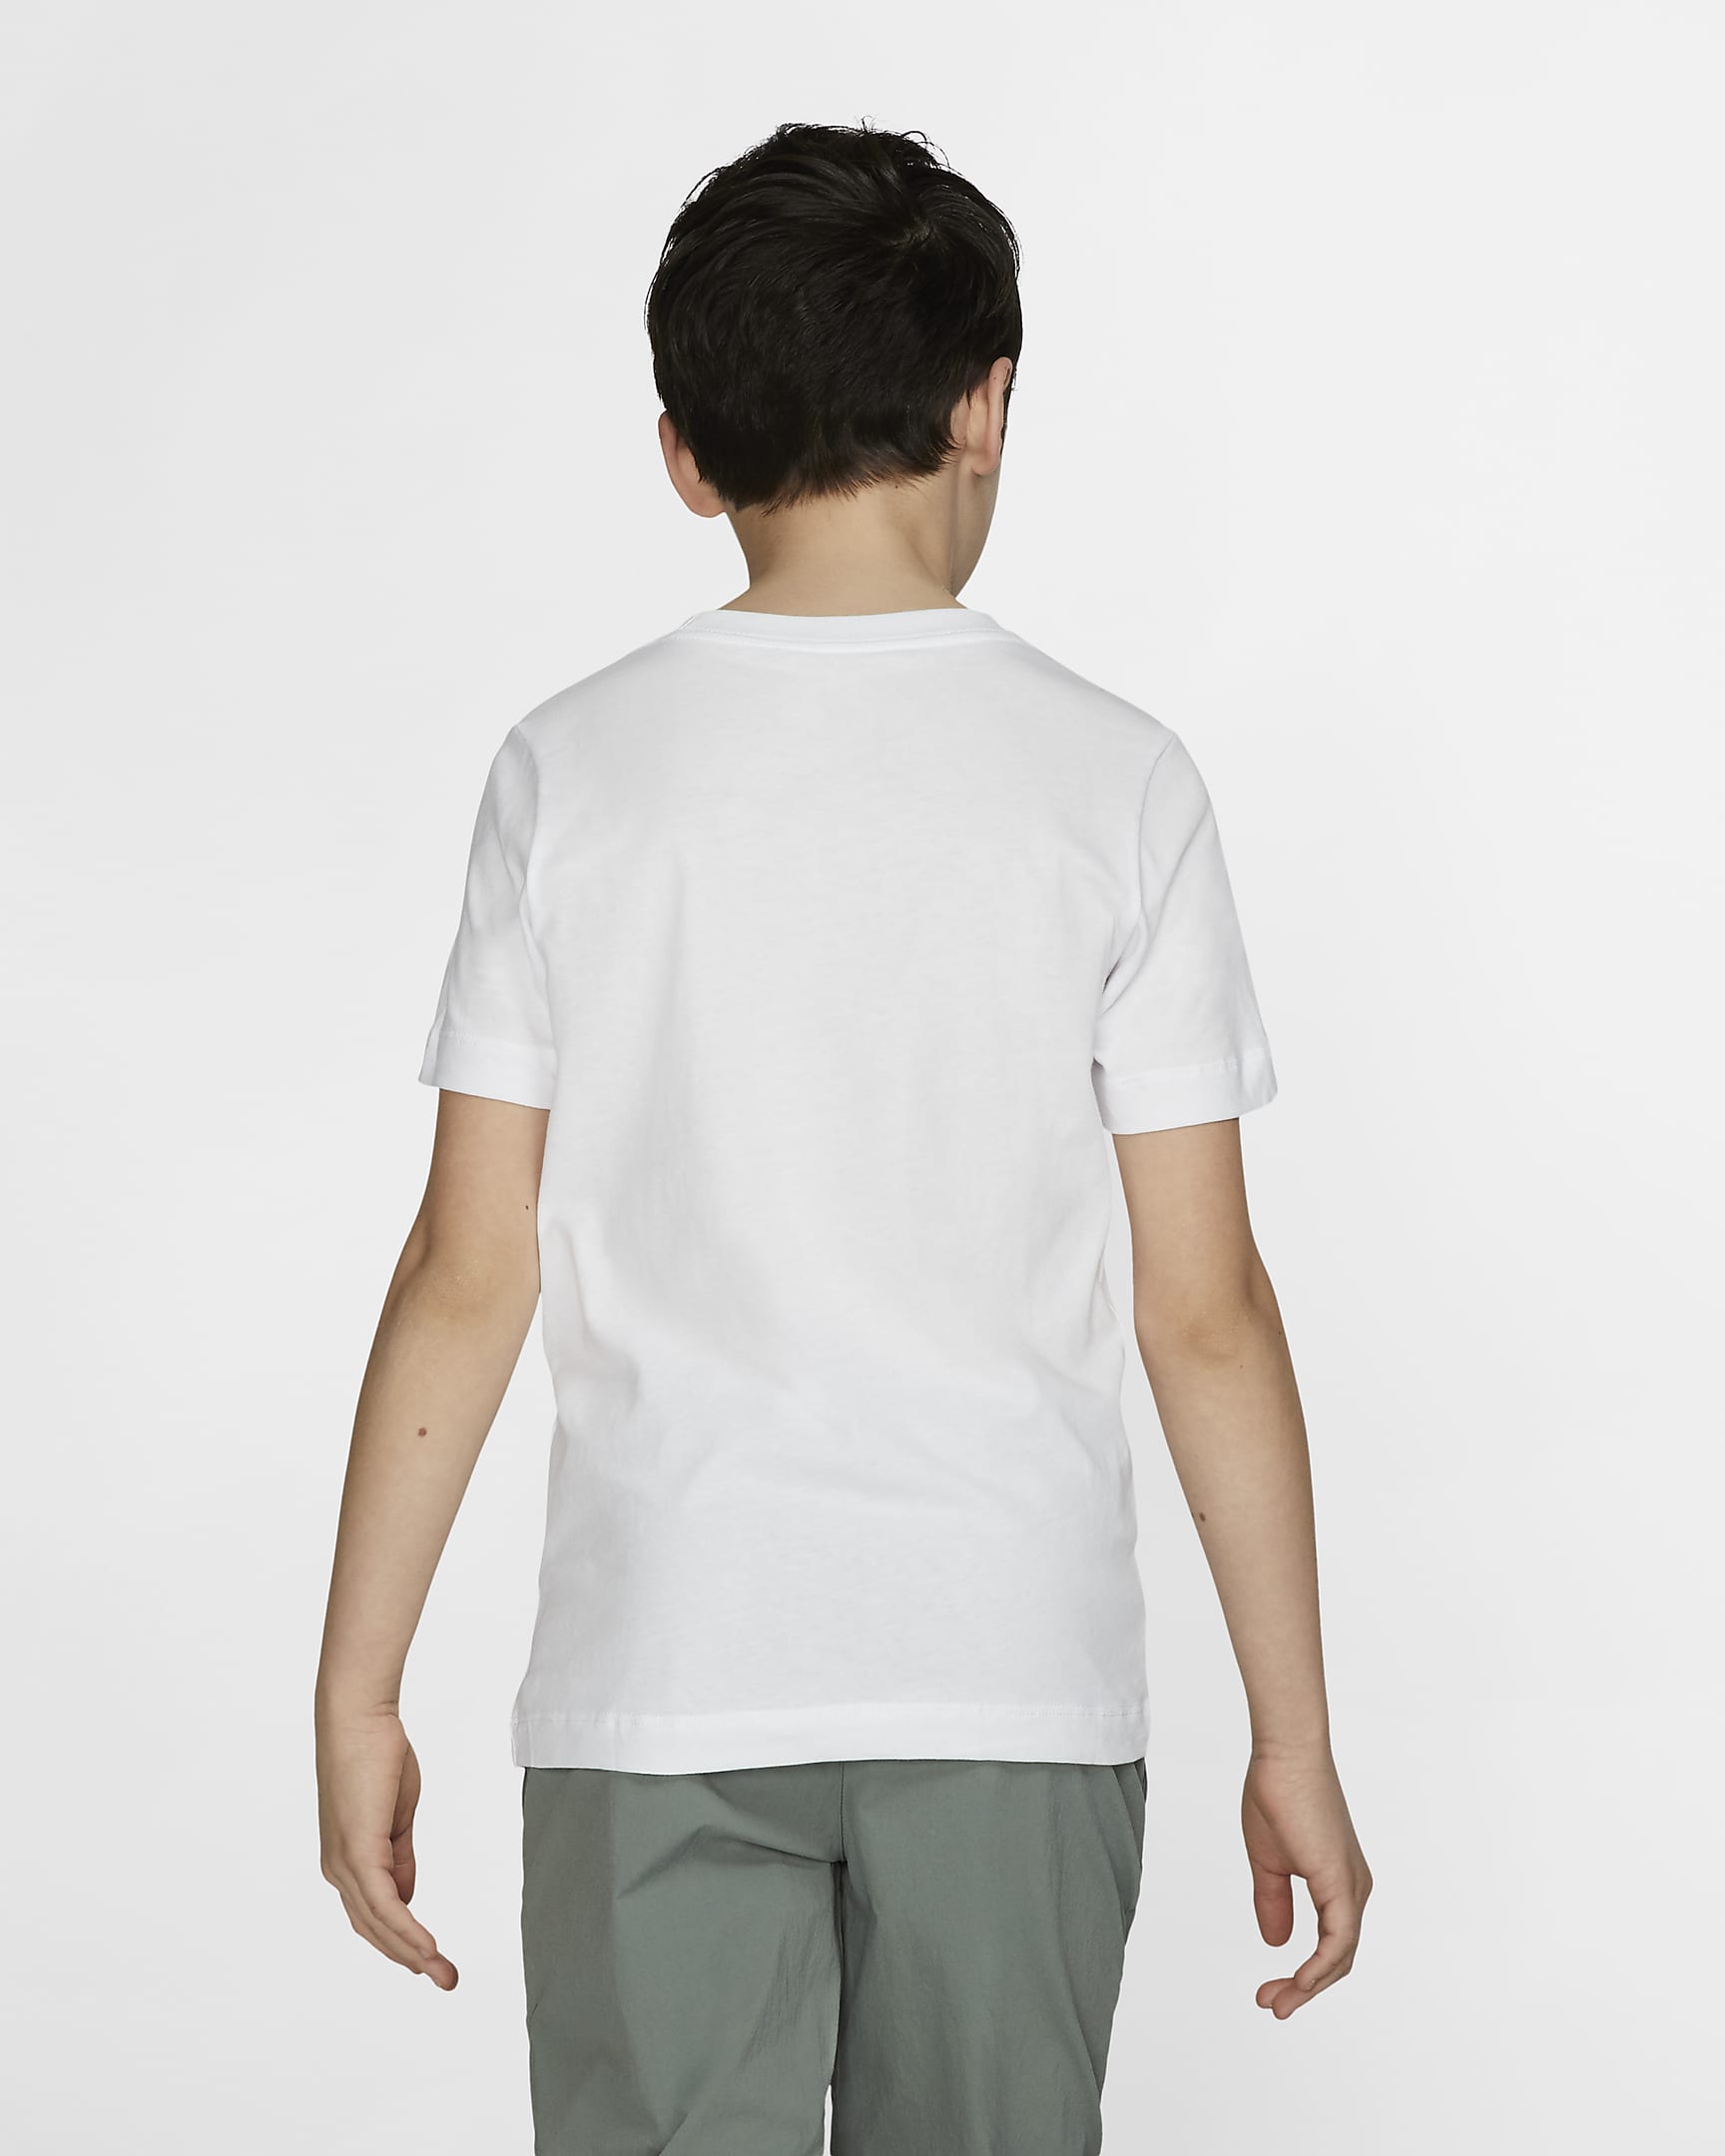 Nike Sportswear Older Kids' T-Shirt - White/Black